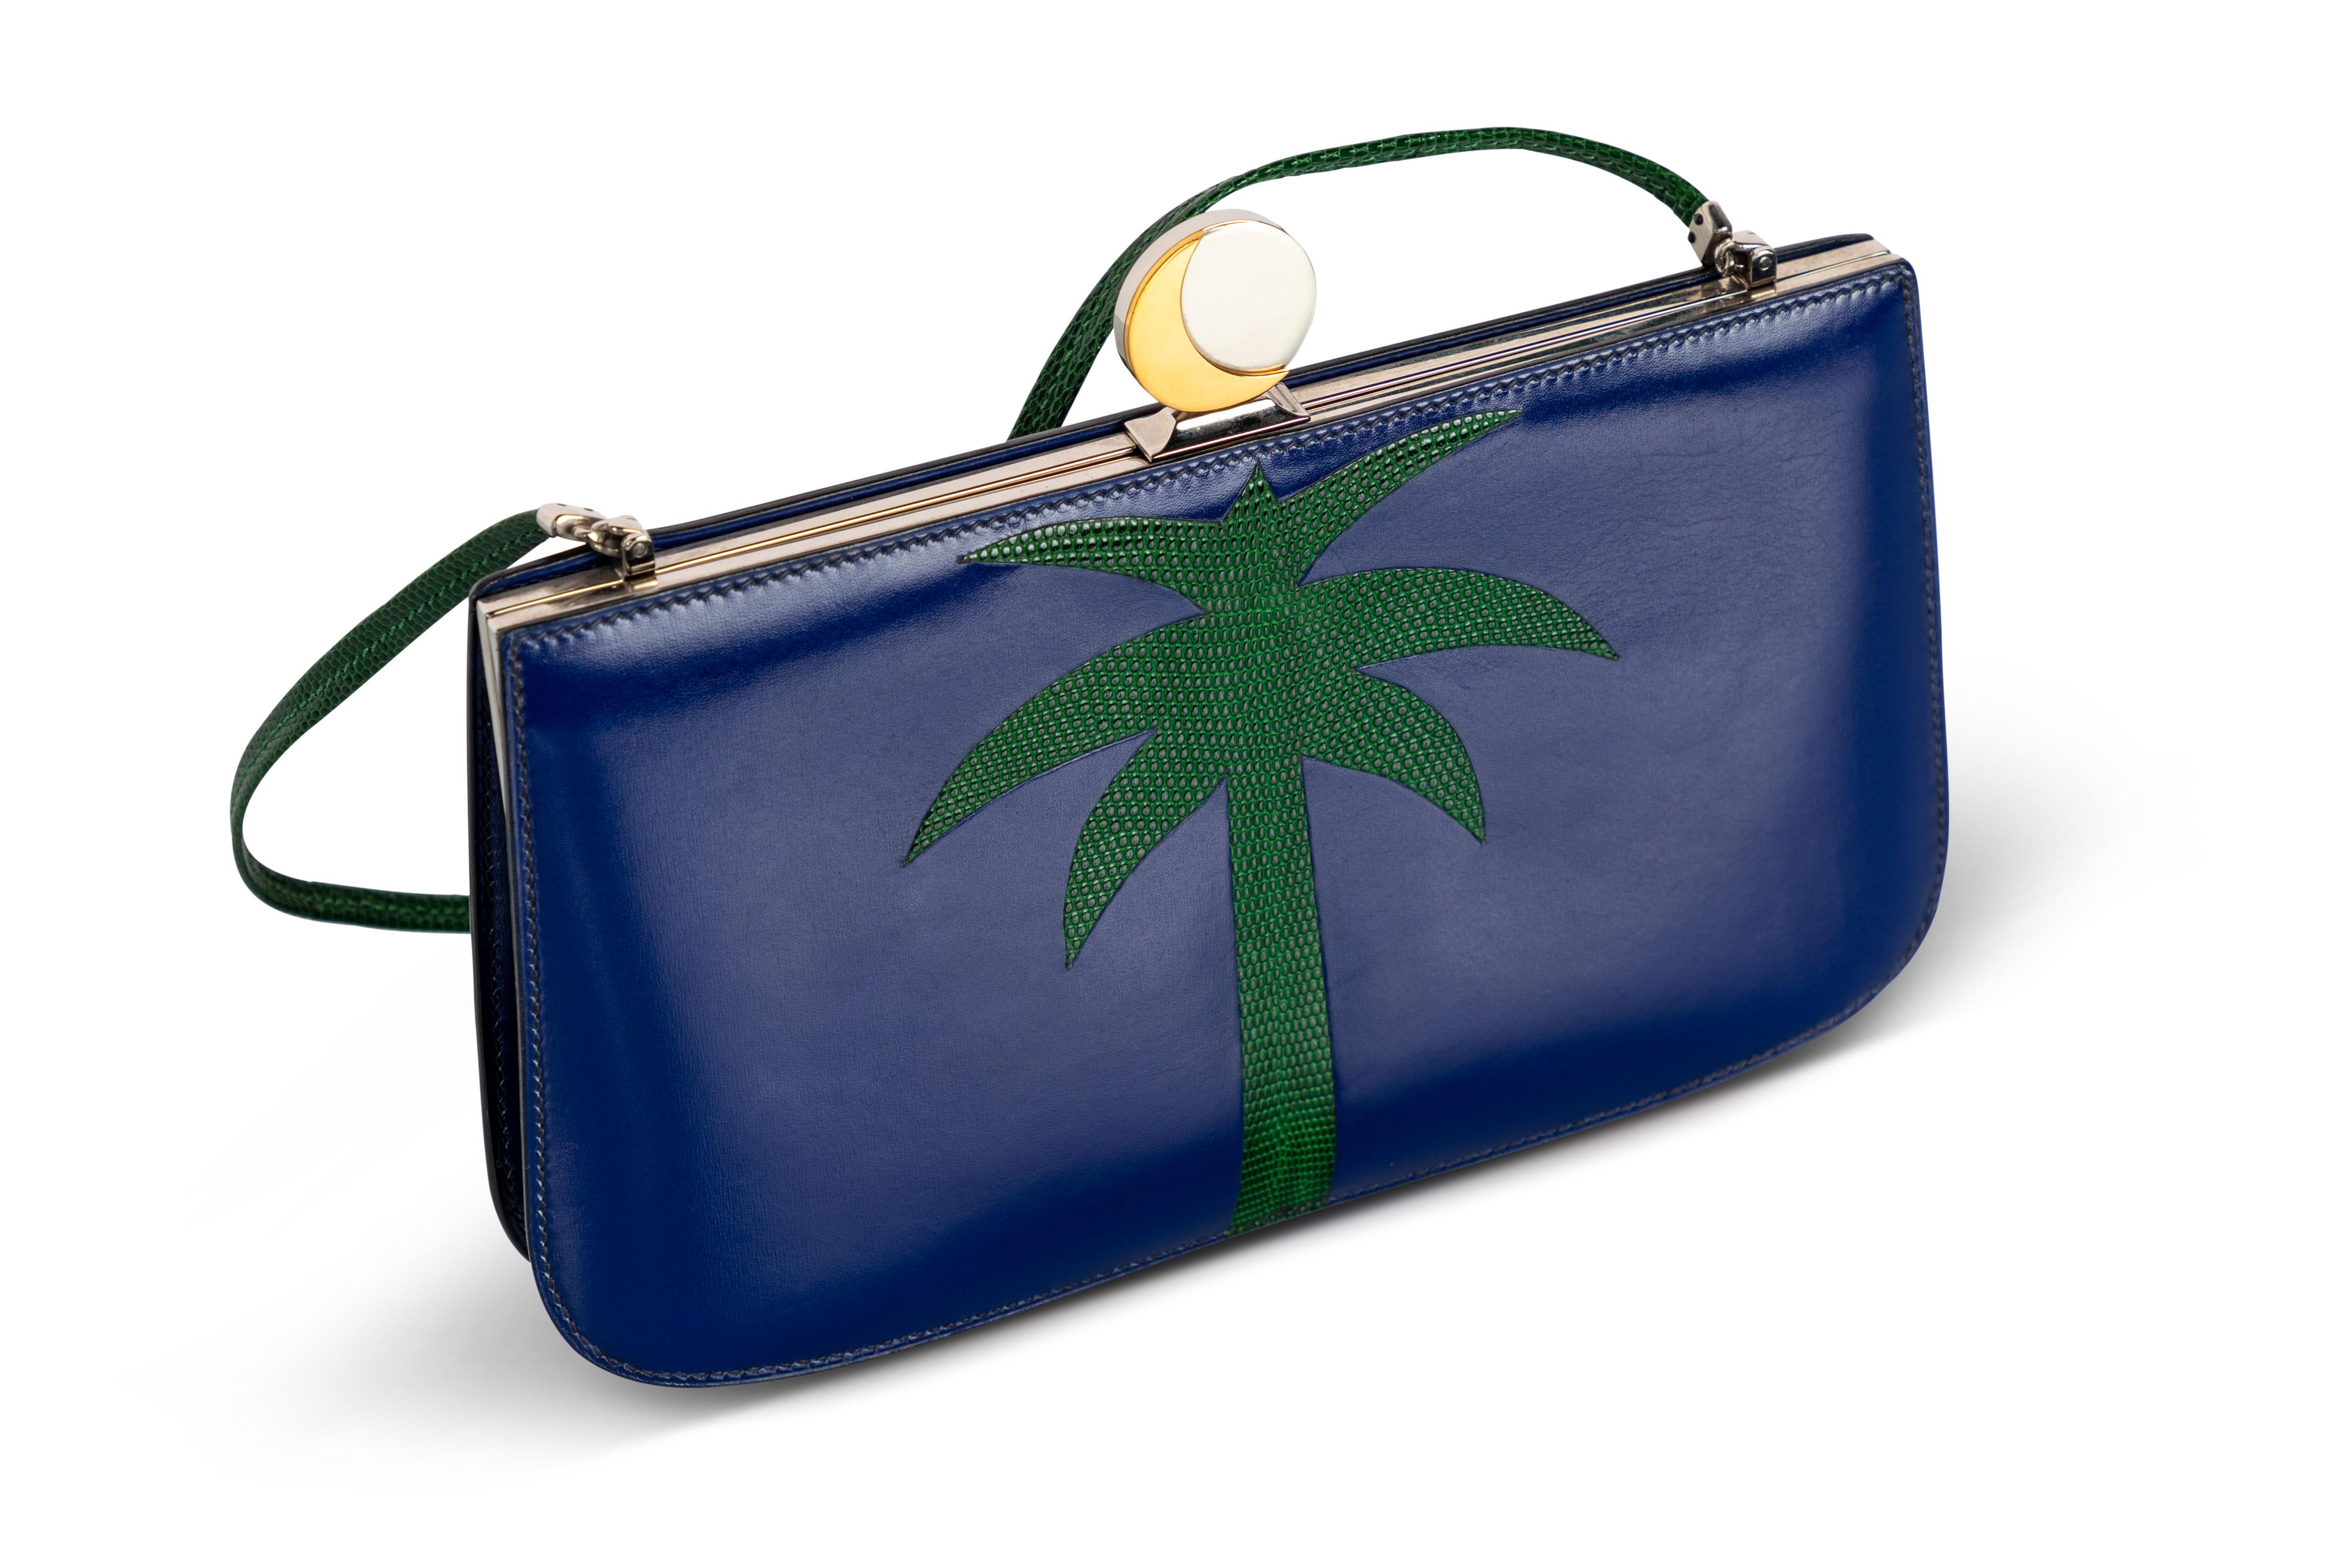 Hermès Sac à Malice Palm Tree Bag Rare In Good Condition For Sale In Boca Raton, FL